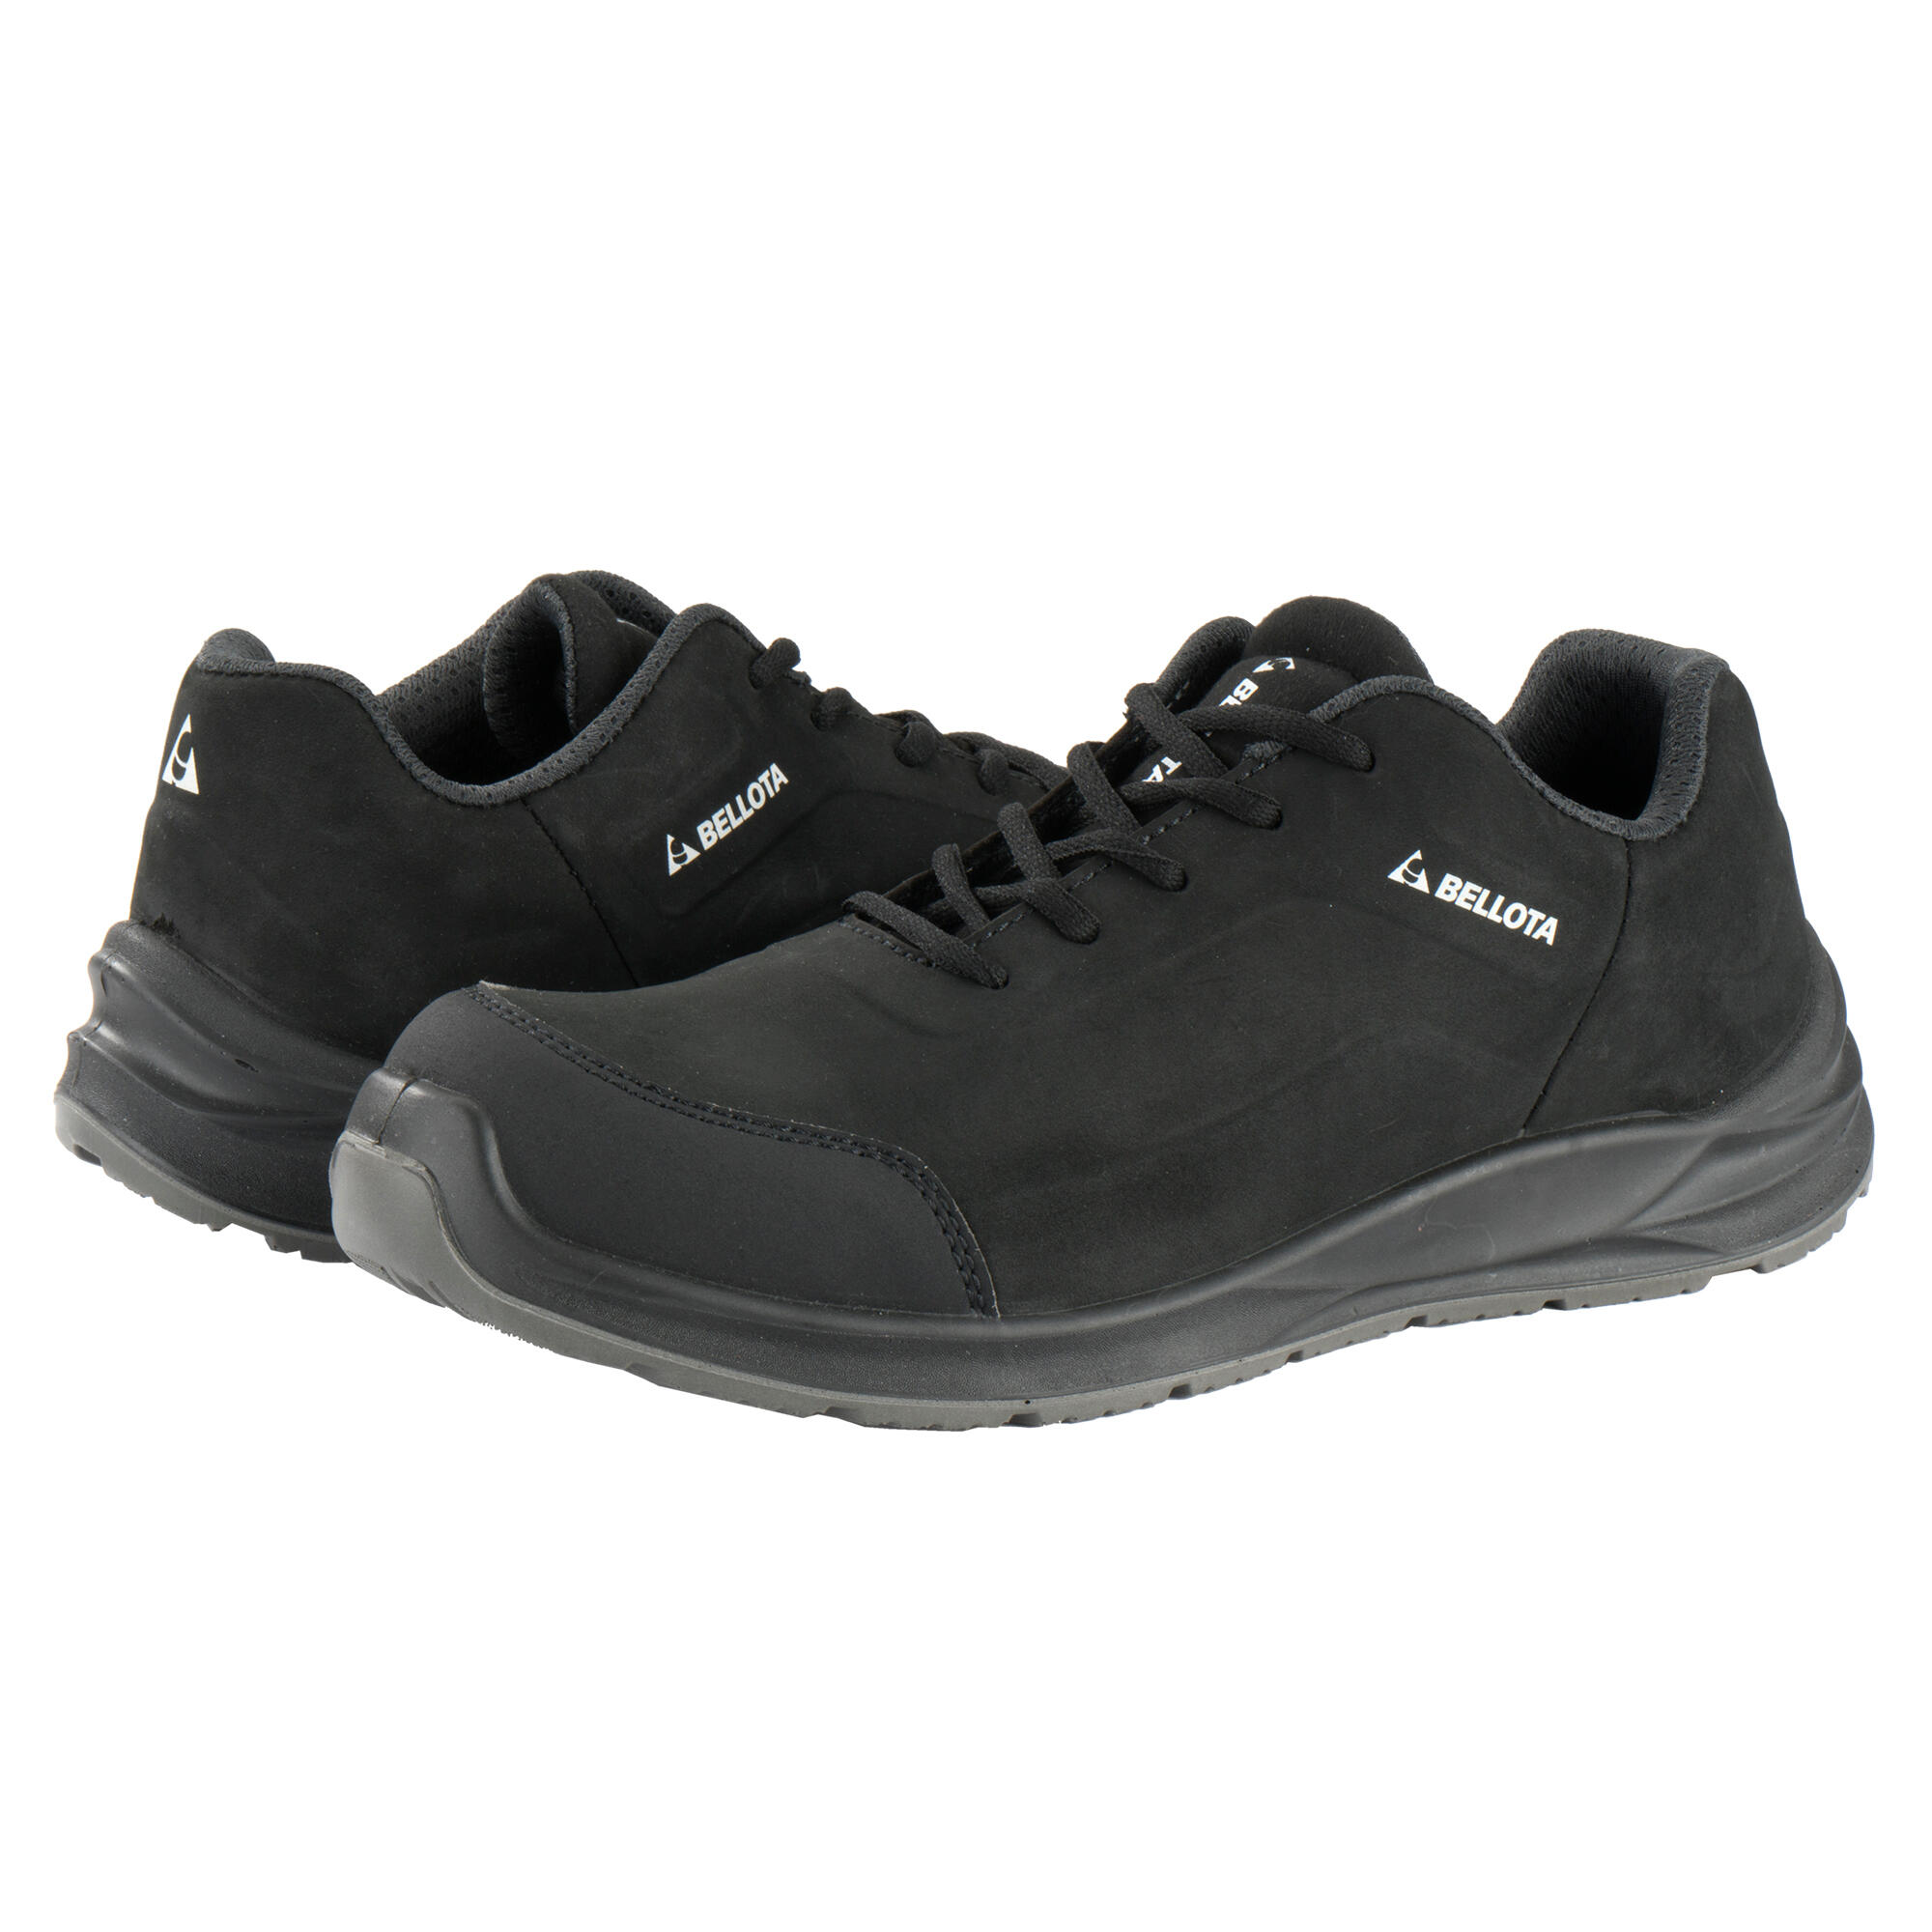 Zapatos seguridad S3 BELLOTA negro Leroy Merlin